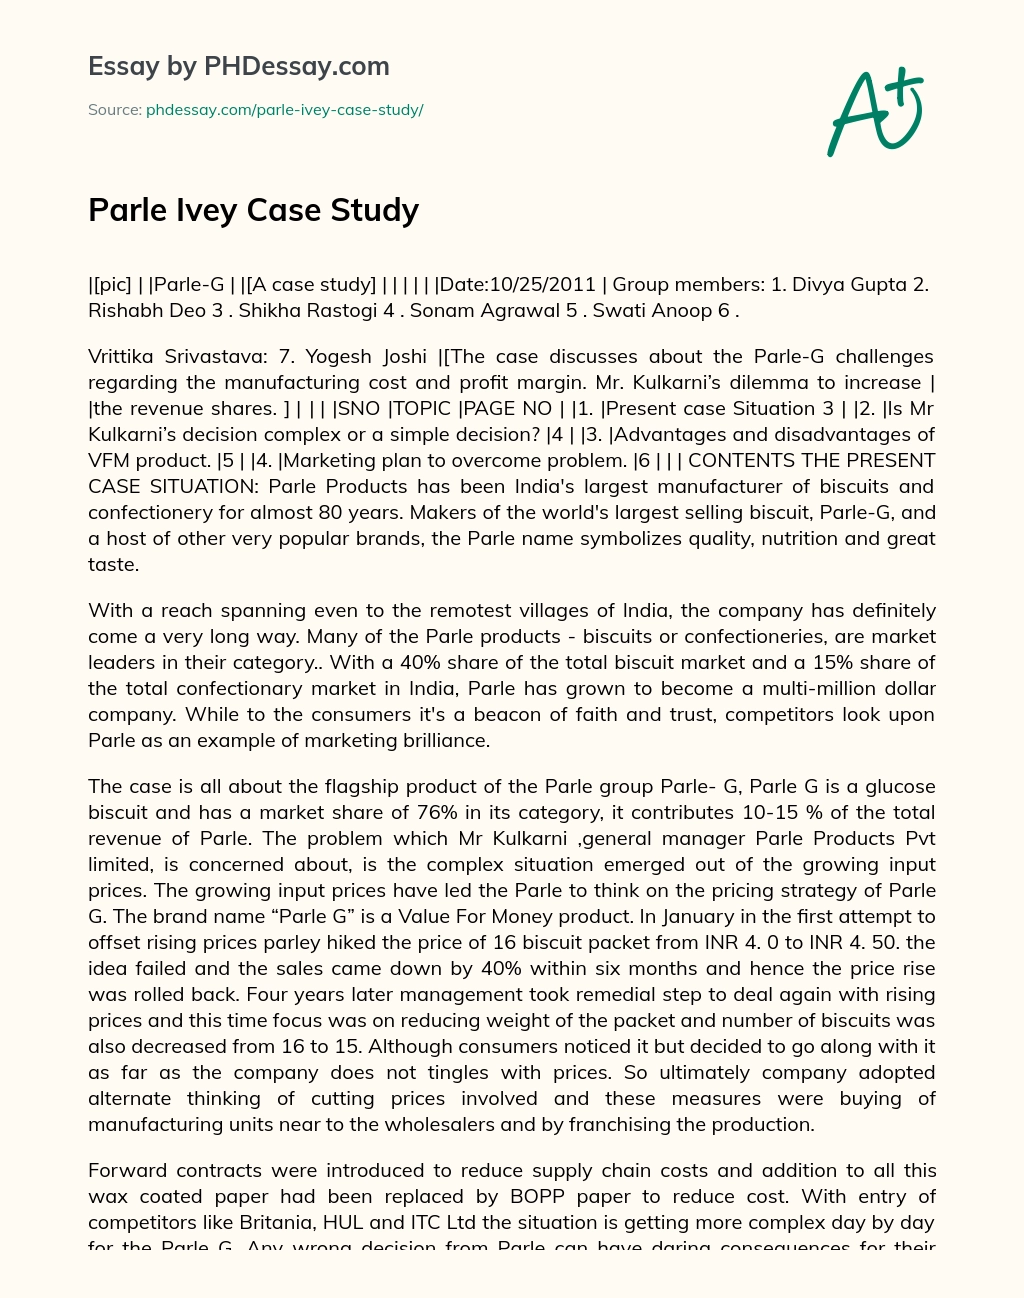 Parle Ivey Case Study essay